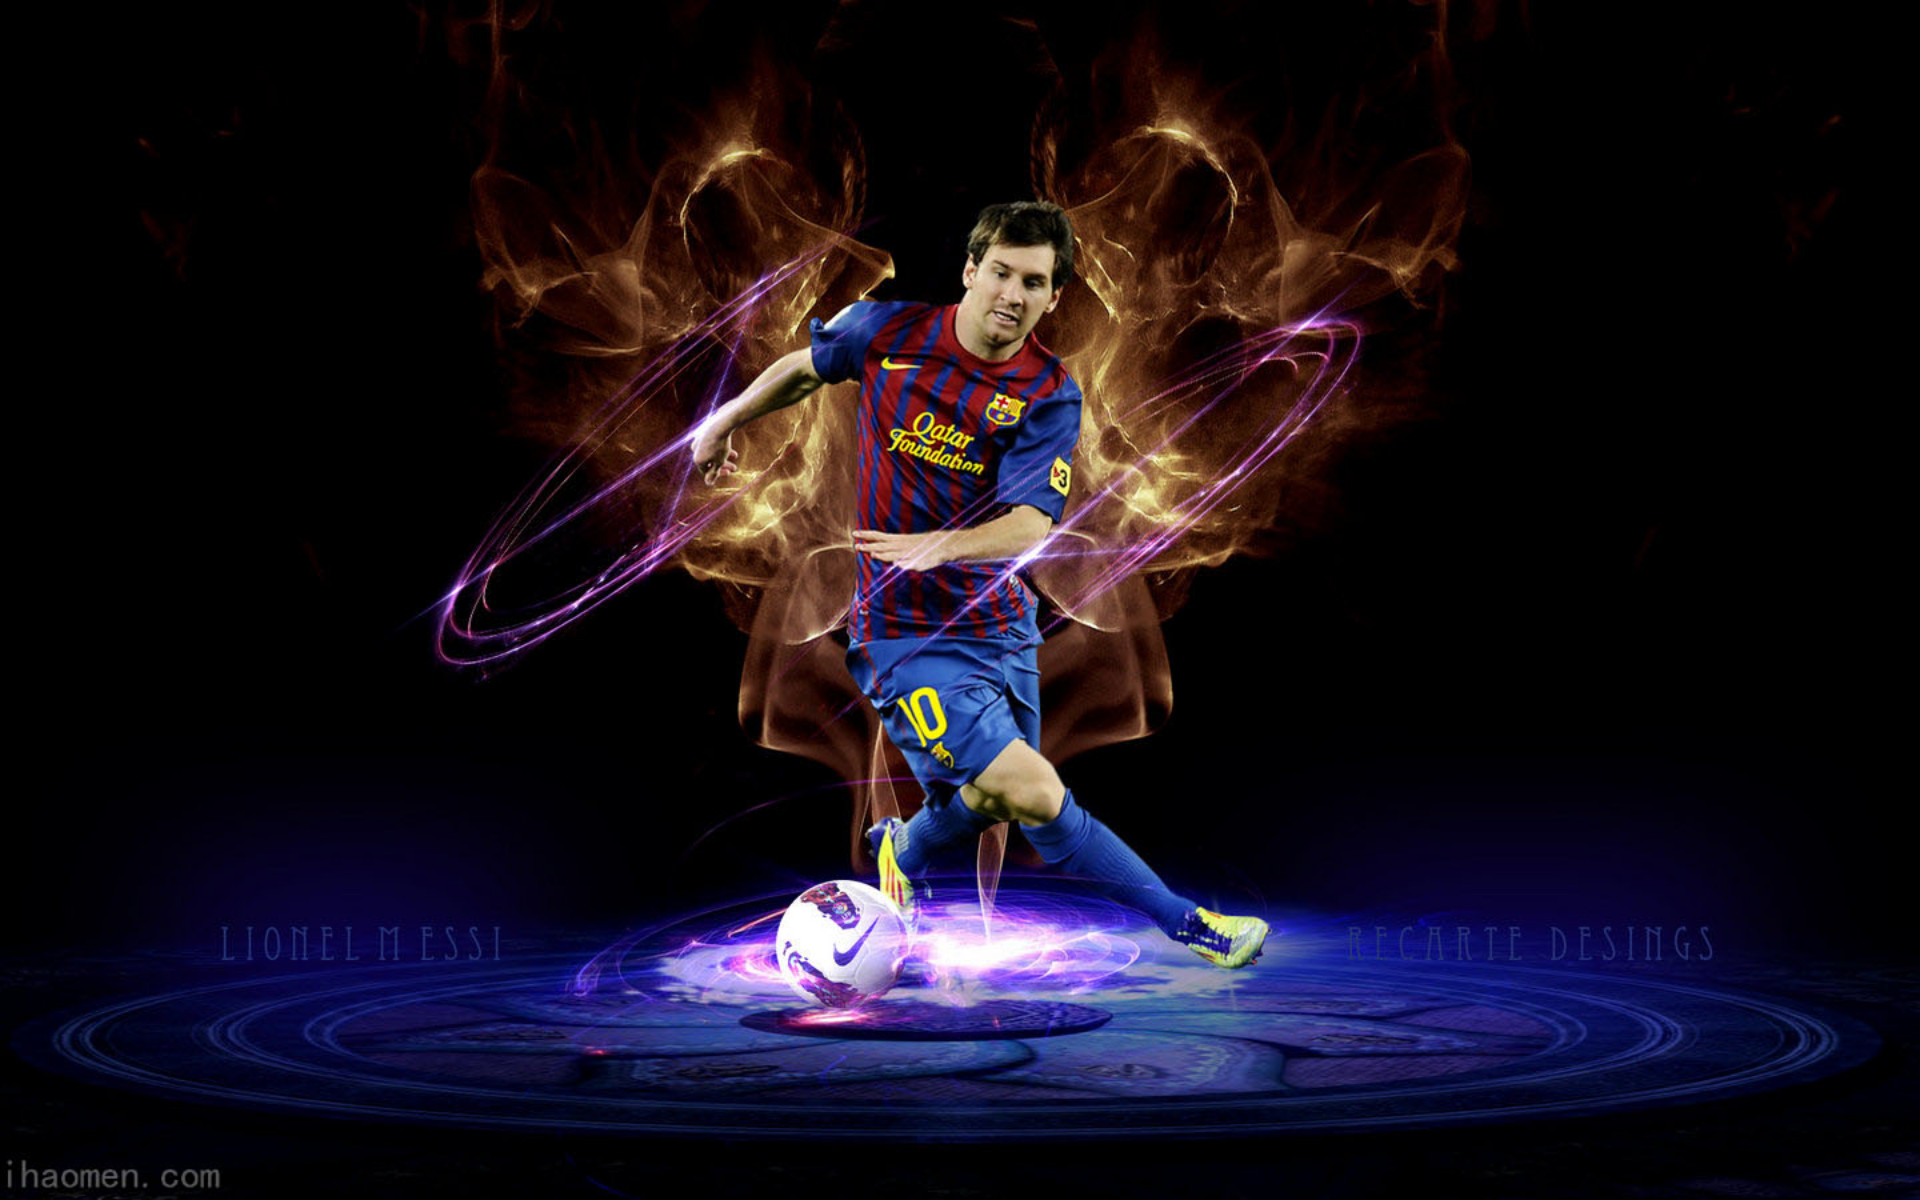 The forward of Barcelona Lionel Messi in dark background Desktop wallpapers  1920x1200